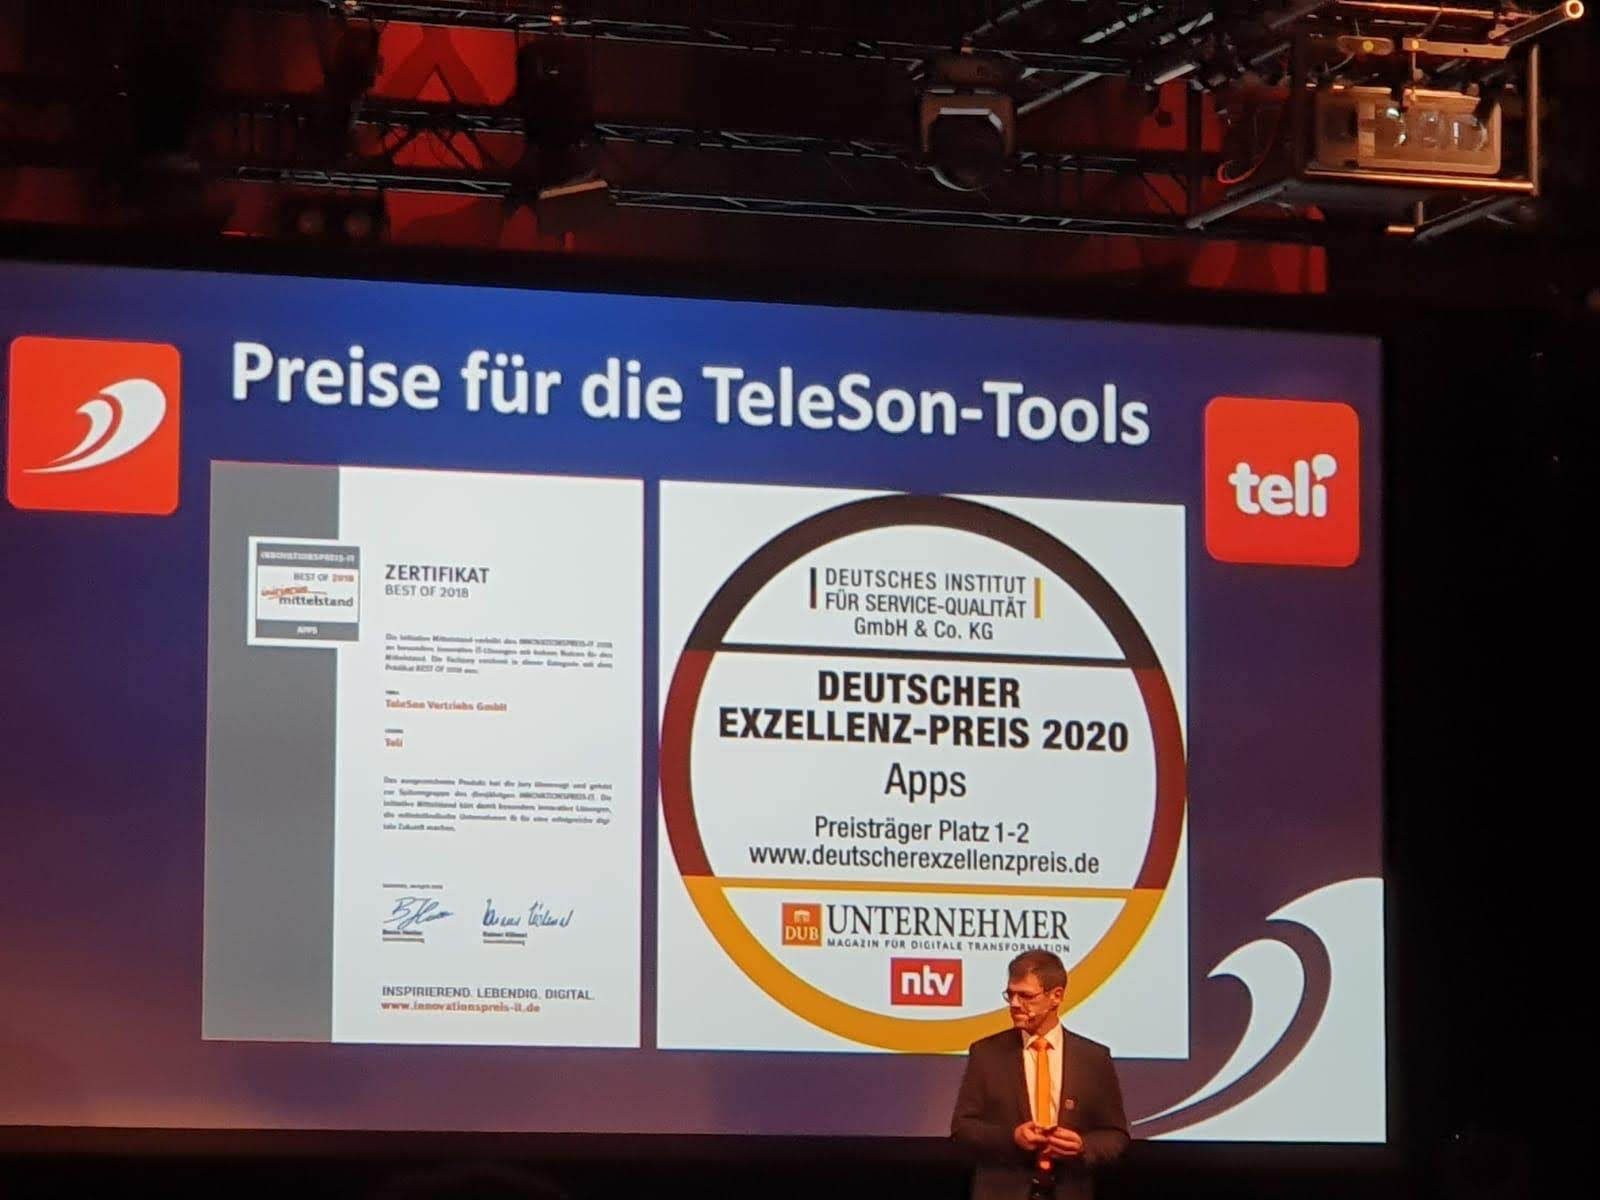 Teleson Teli App Deutscher Exzellenz-Preis